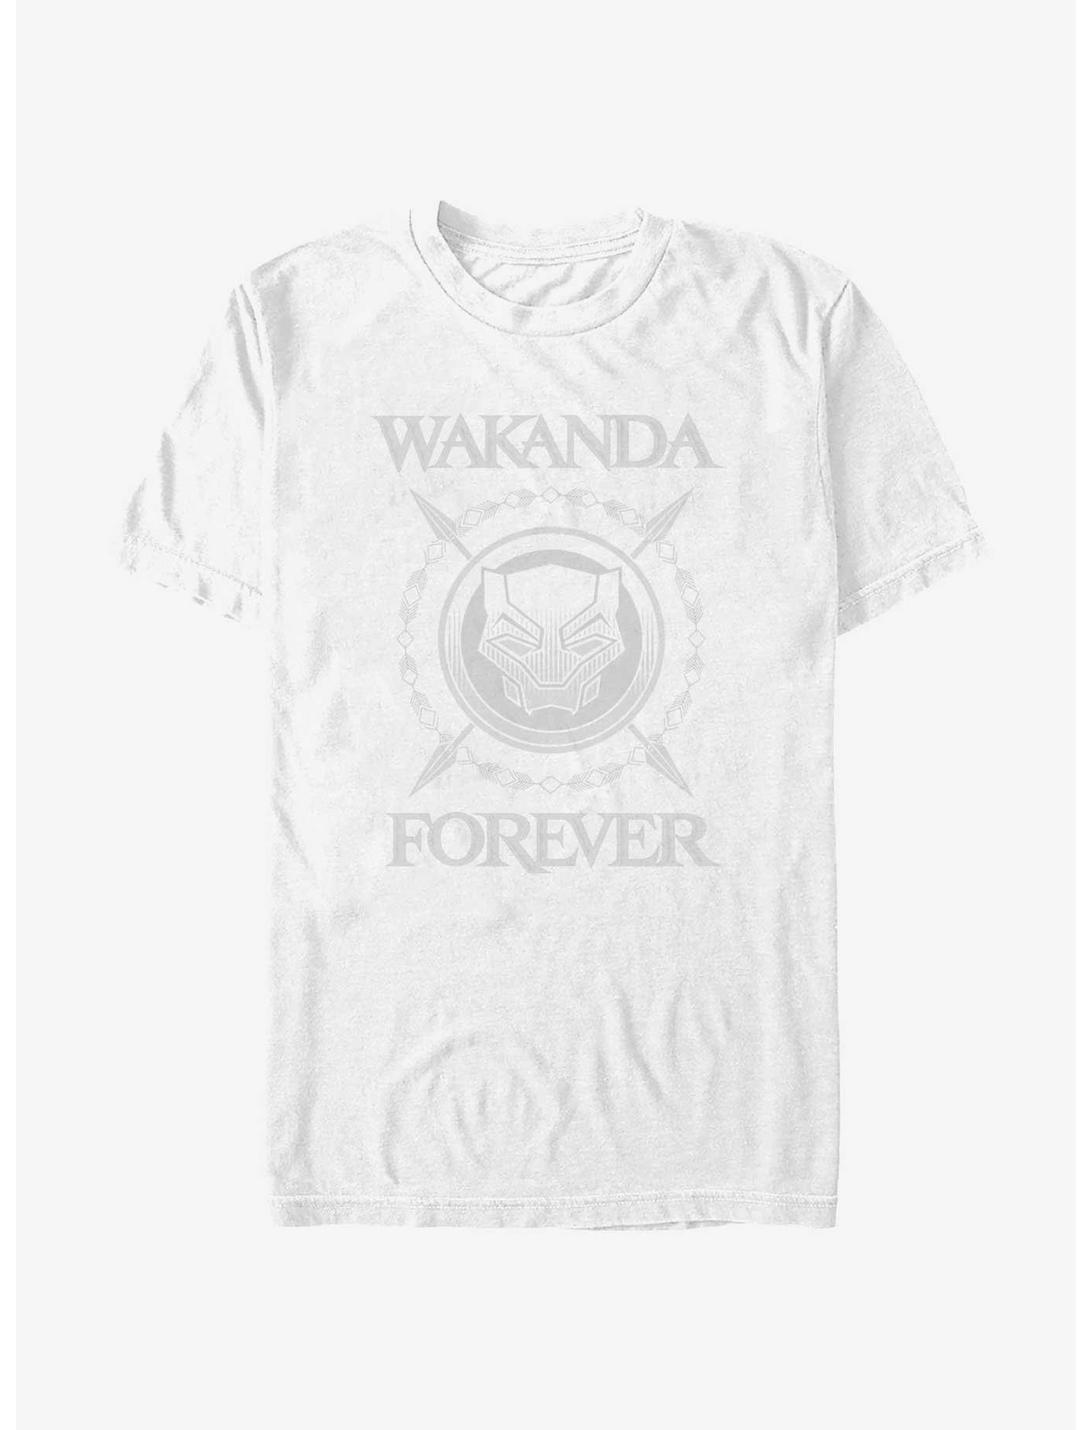 Marvel Black Panther: Wakanda Forever Spears T-Shirt, WHITE, hi-res